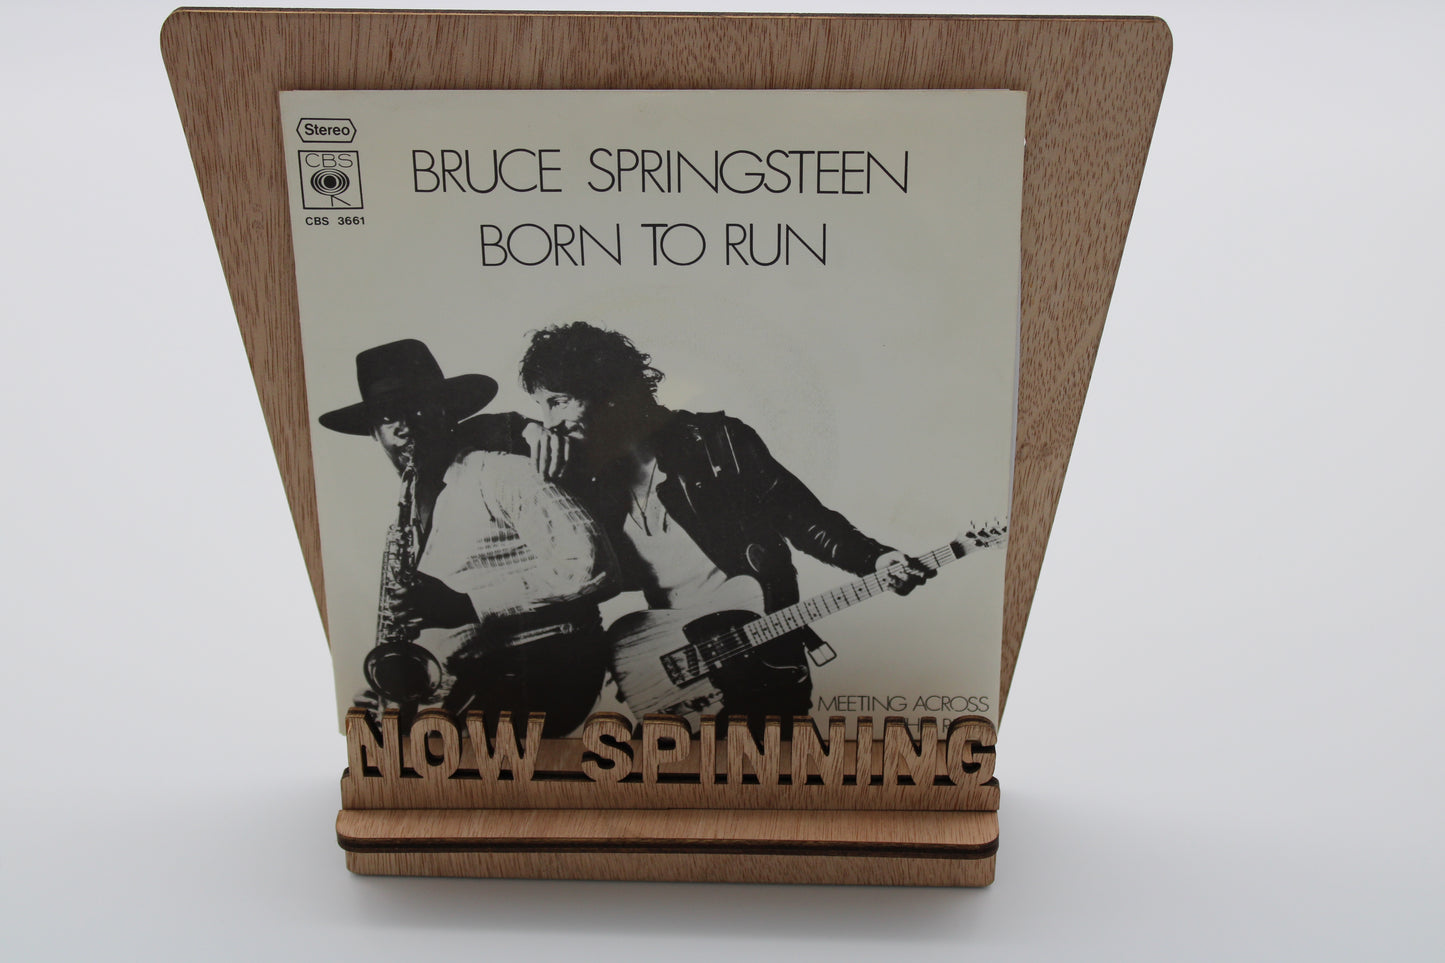 Bruce Springsteen 45 Record 7" Vinyl  Born to Run 1976 German Import